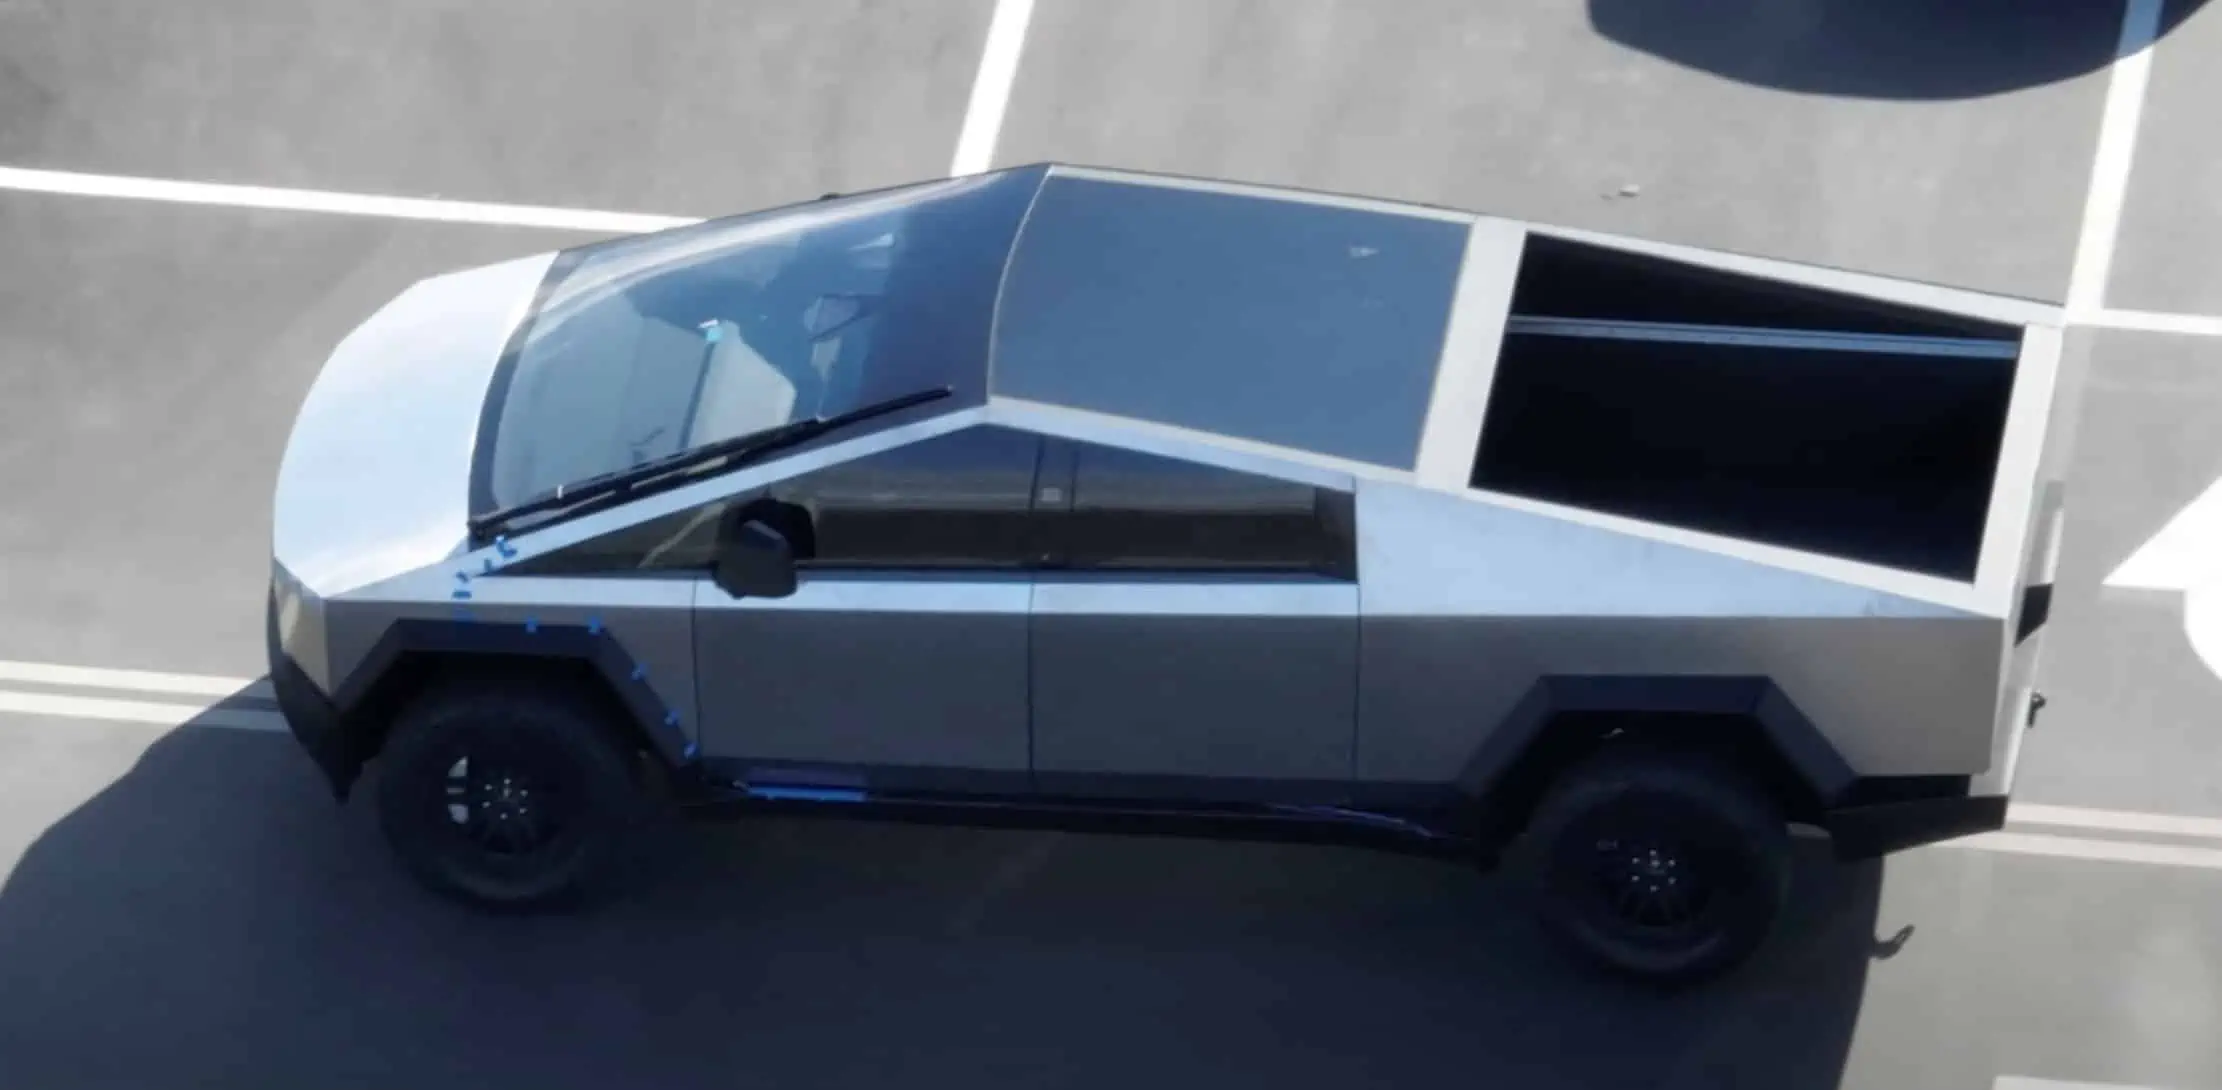 New Tesla CyberTruck prototype more realistic, less cool (video